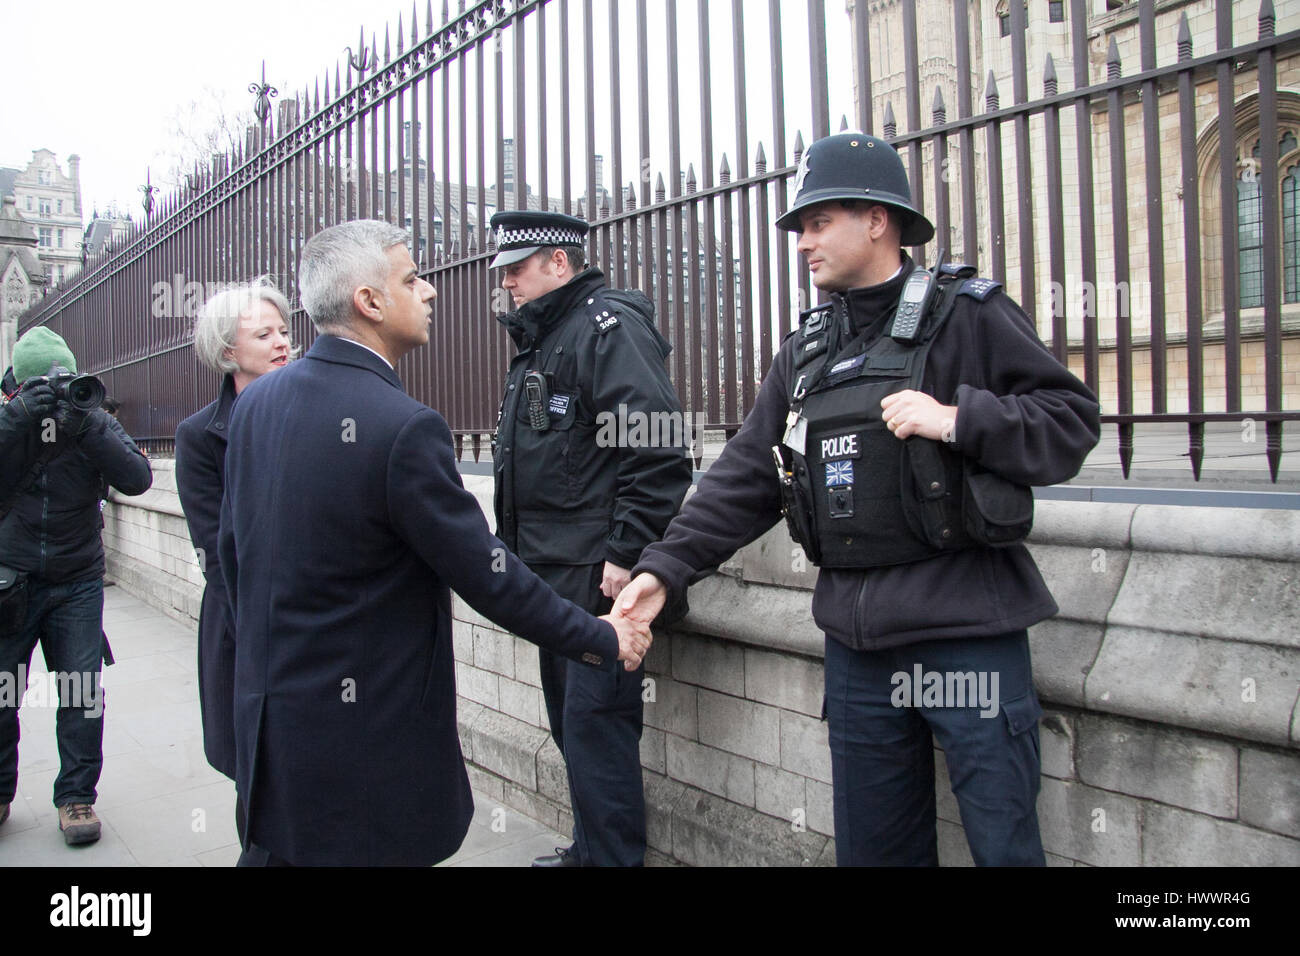 Londres, Reino Unido. 24 Mar, 2017. El Alcalde de Londres, Sadiq Khan visita al Parlamento a rendir homenaje a la policía después de los ataques terroristas: amer ghazzal crédito/Alamy Live News Foto de stock